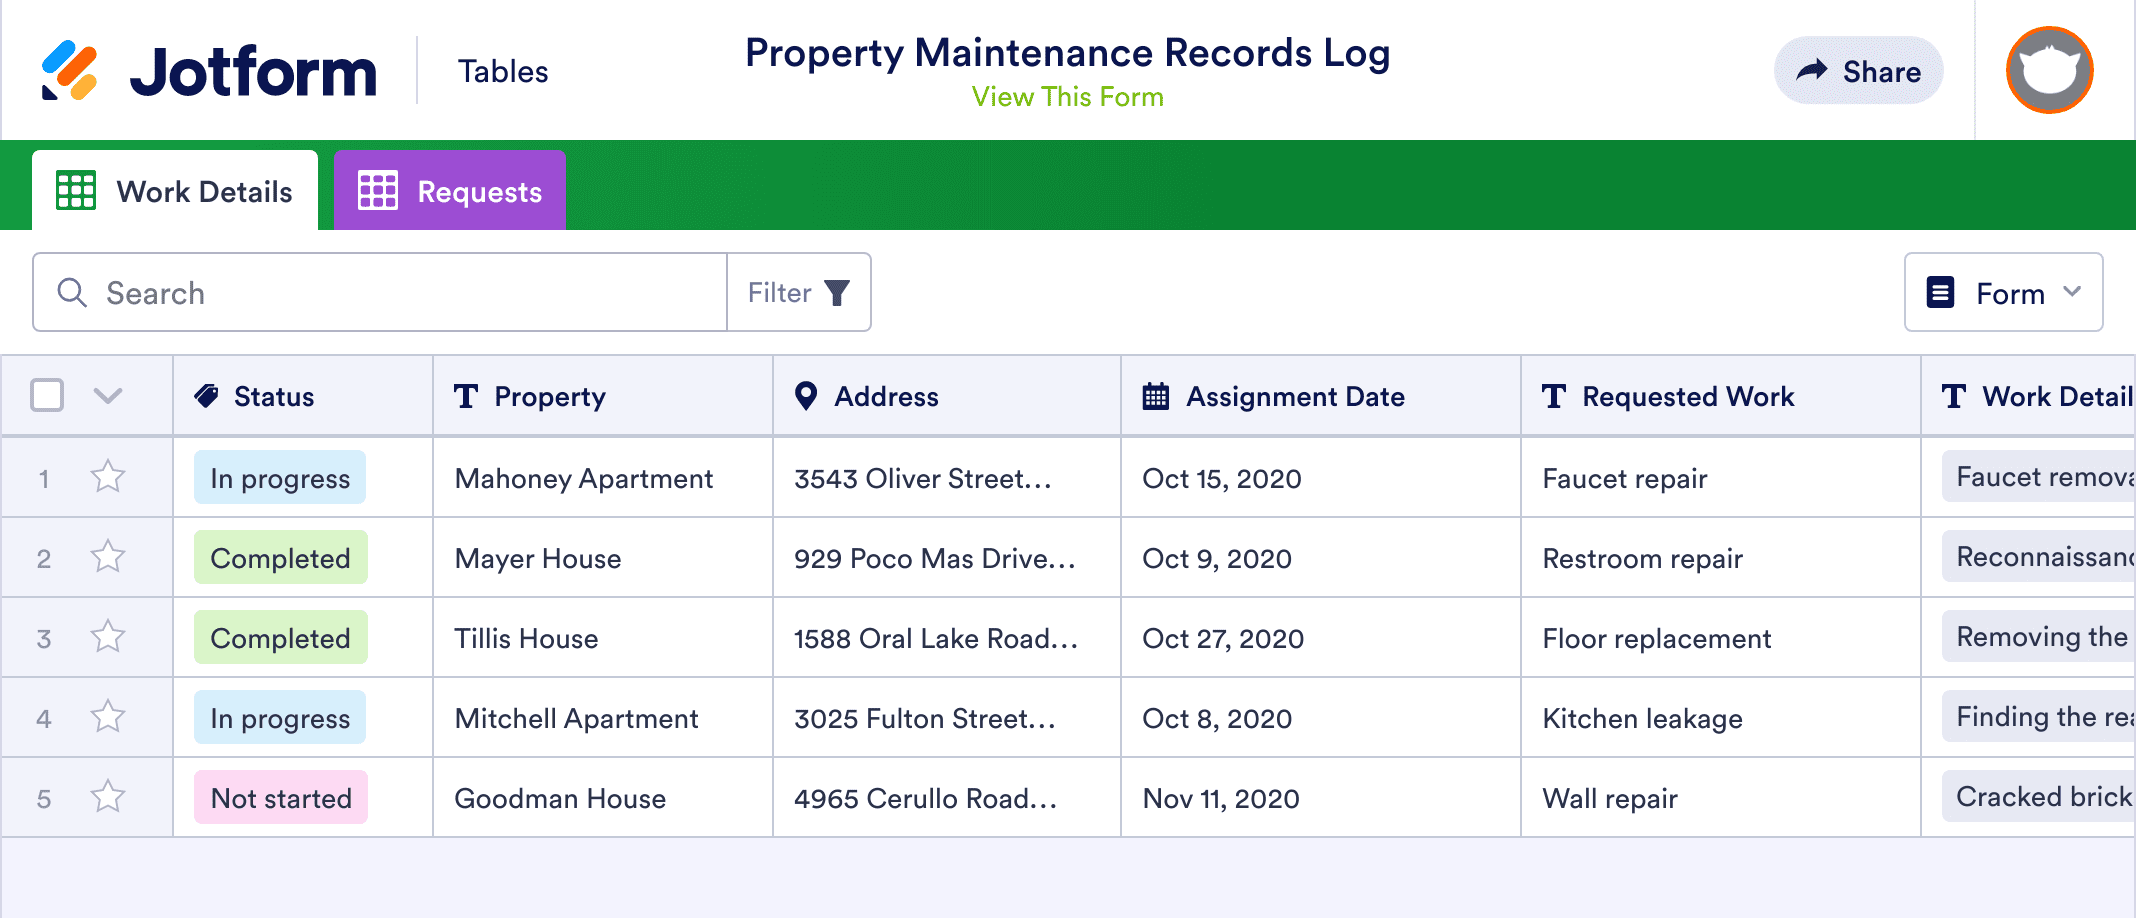 Property Maintenance Records Log